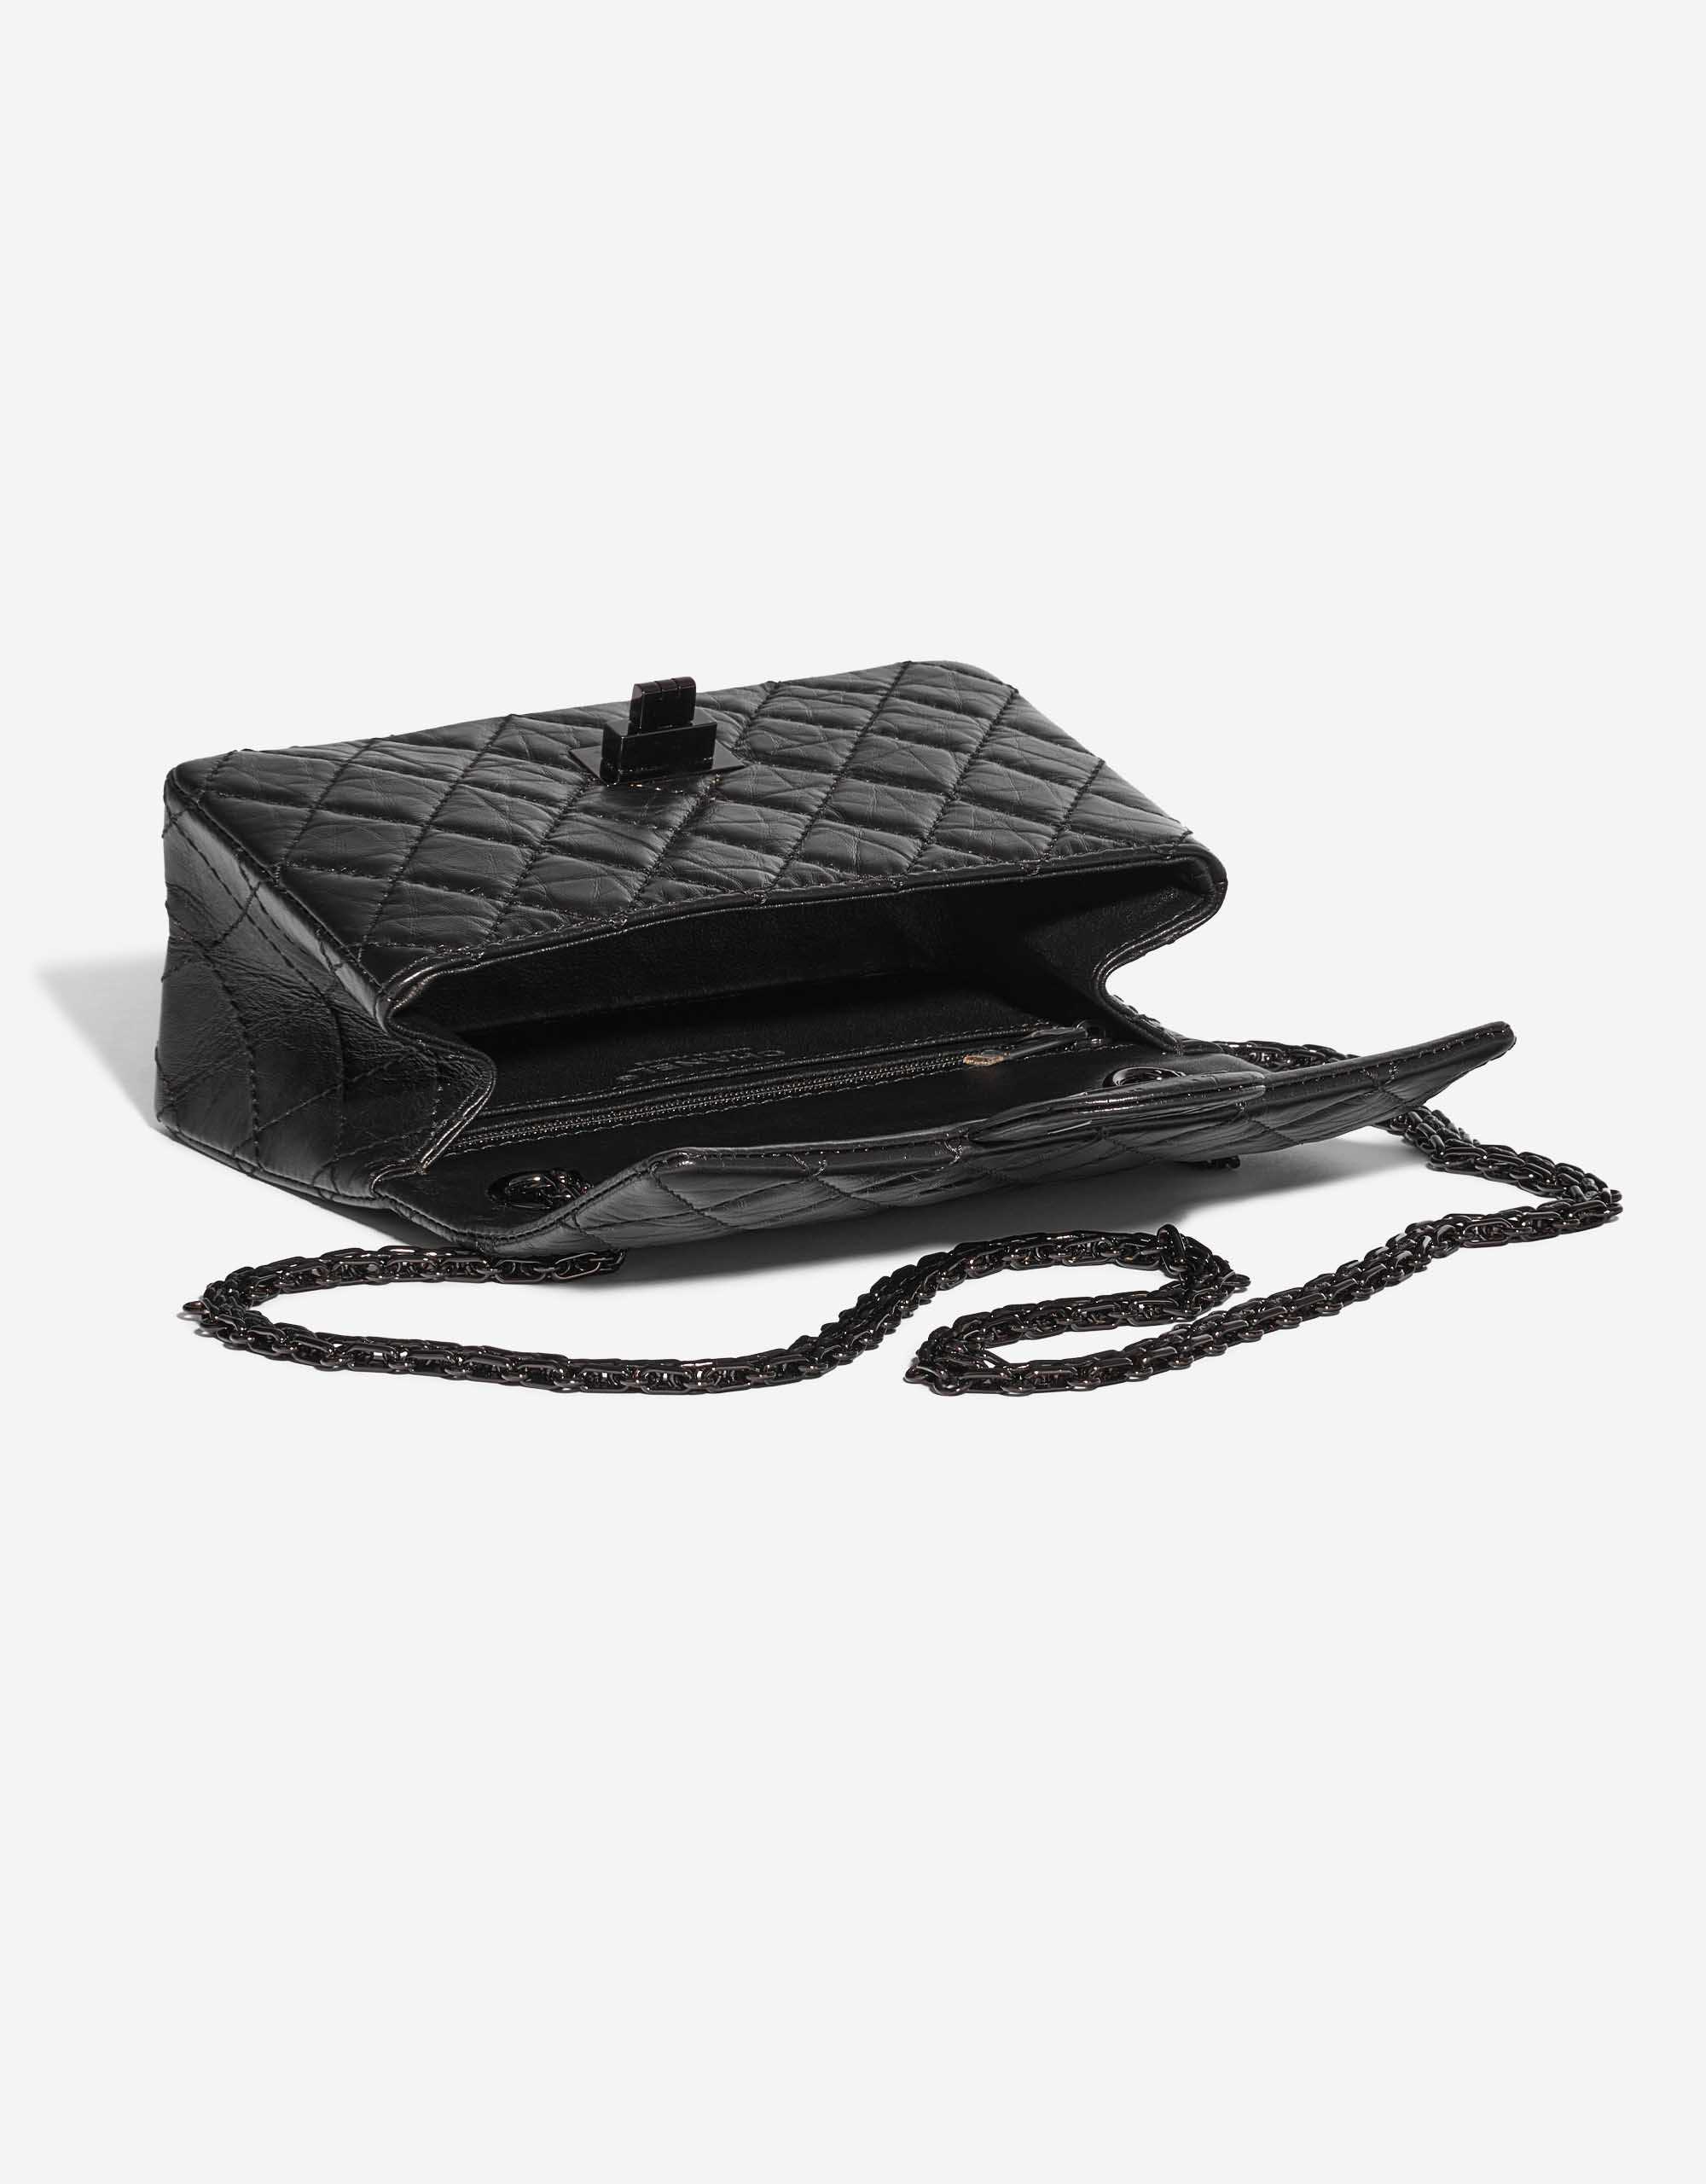 Pre-owned Chanel bag 2.55 Mini Rectangular Aged Calf So Black Black | Sell your designer bag on Saclab.com